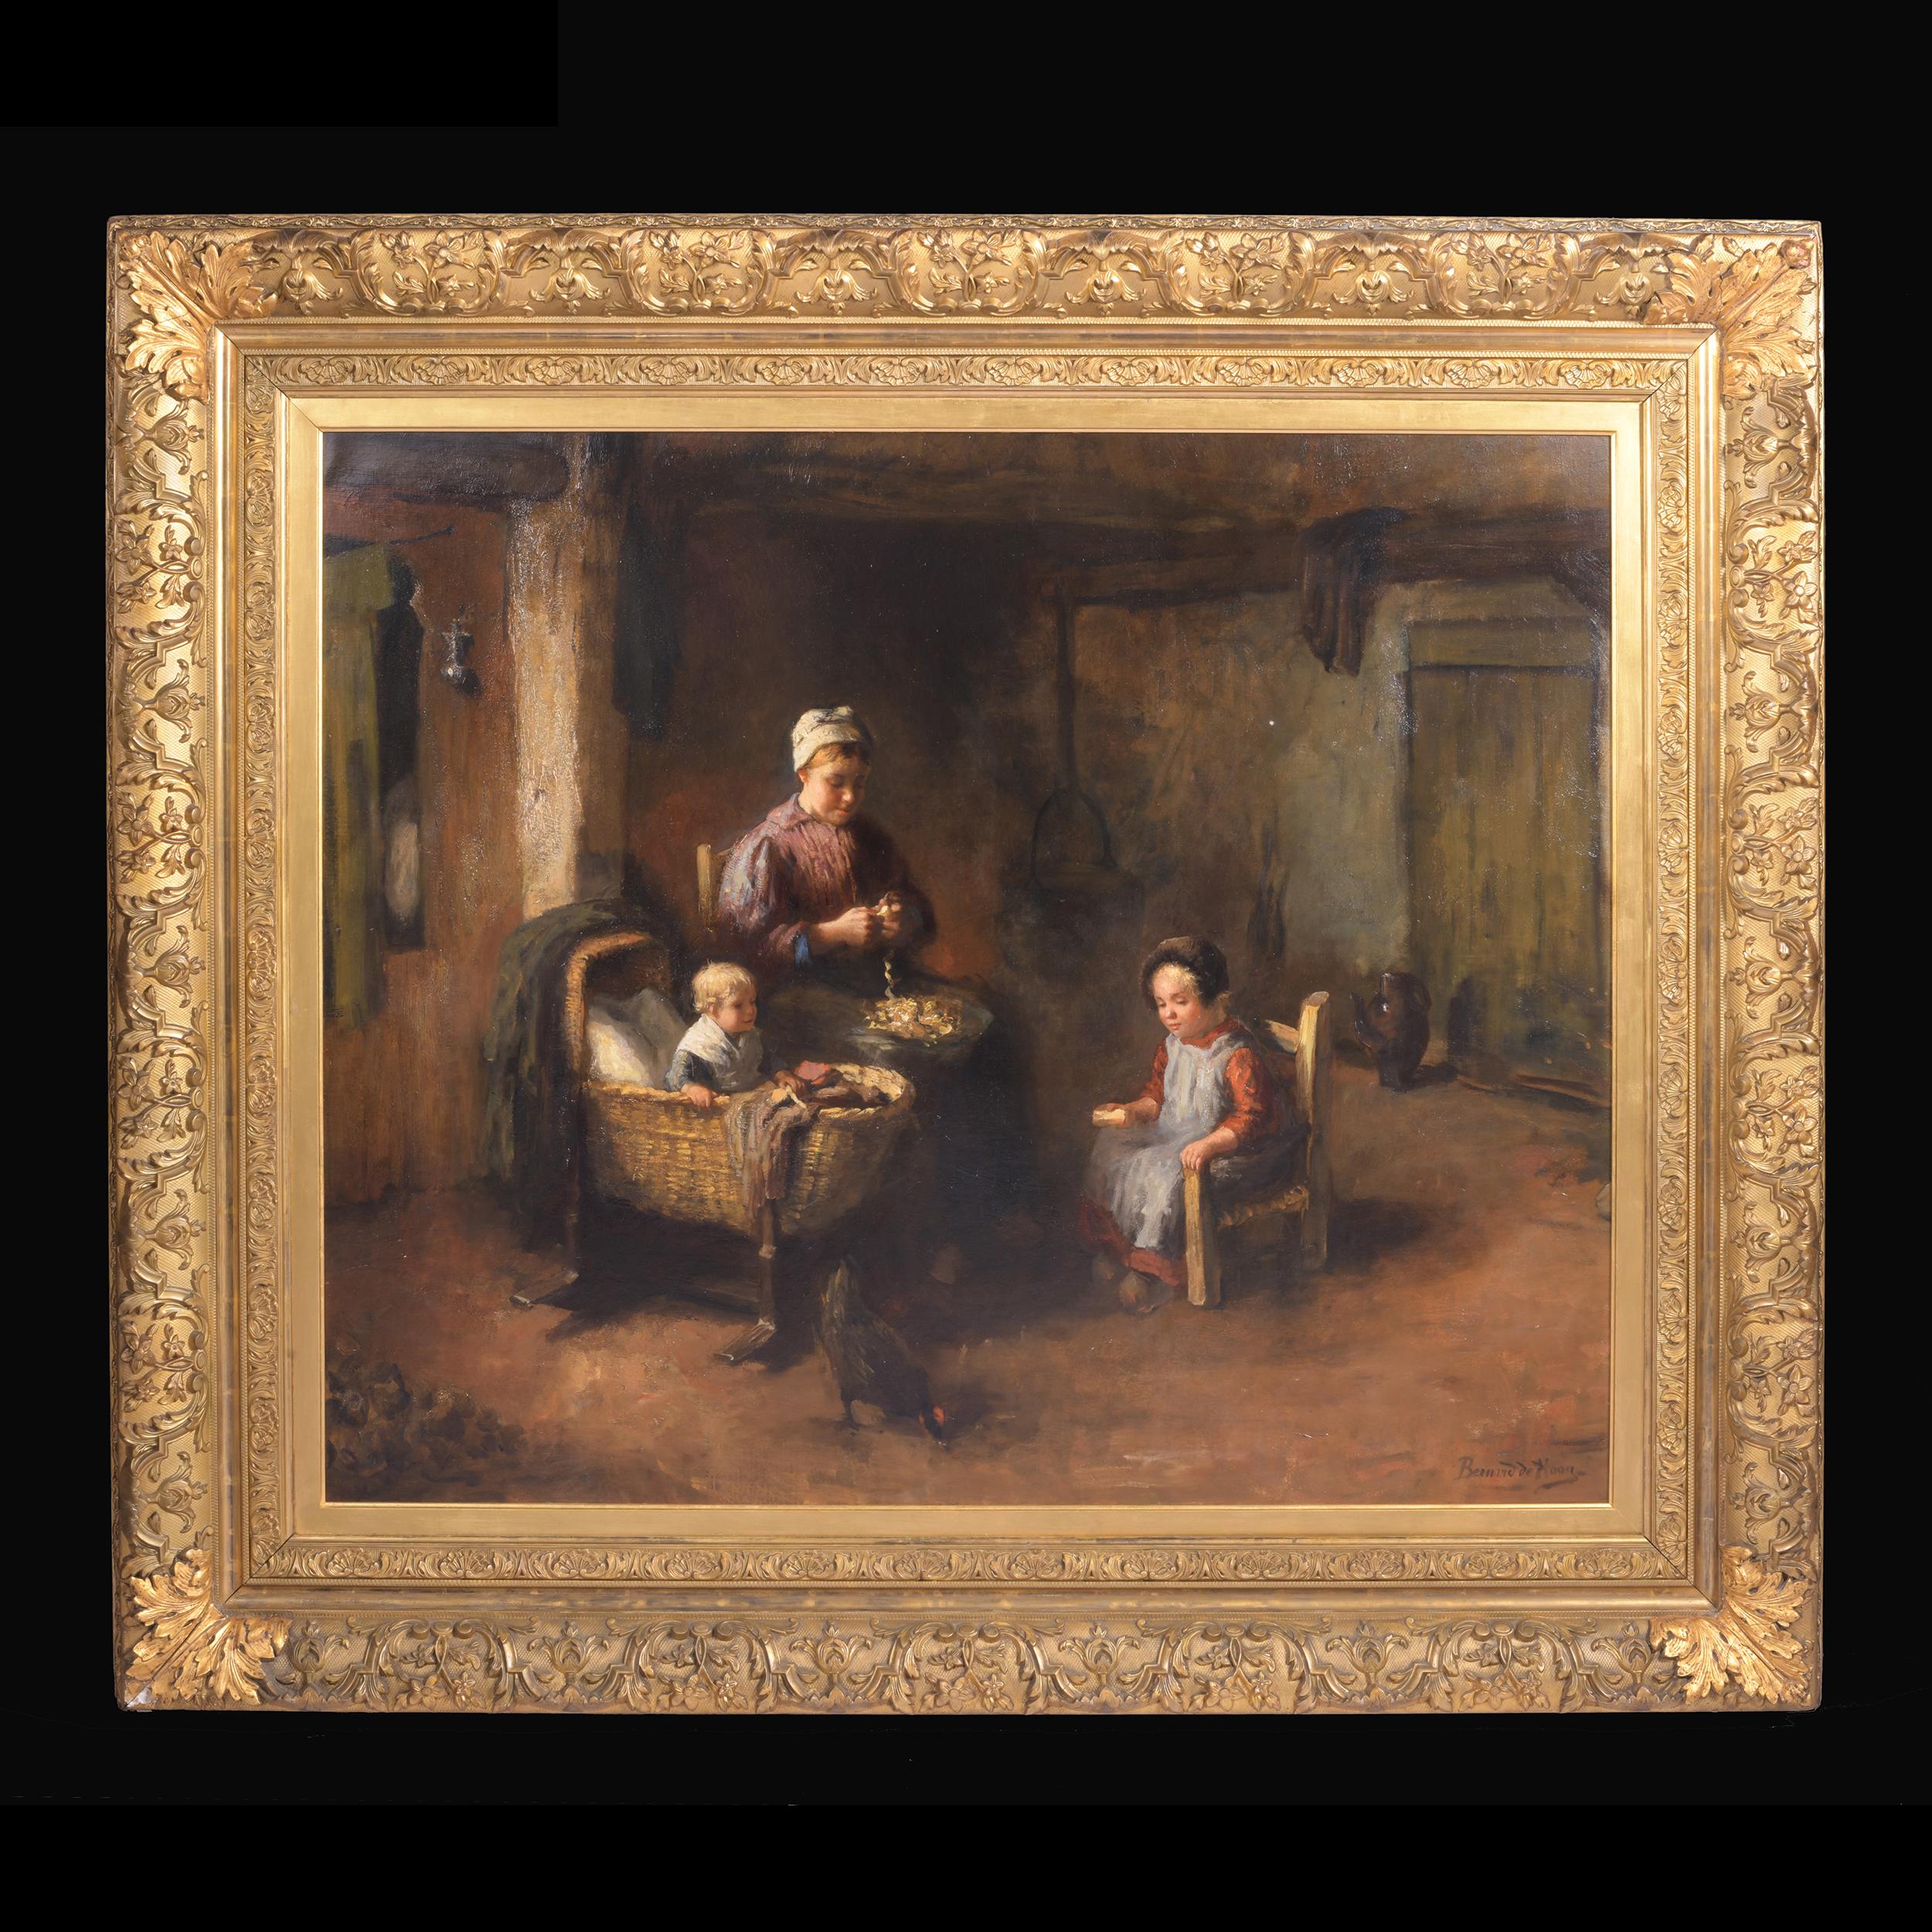 Artist: Bernard de Hoog (1826-1943), Dutch

Titled: Mother feeding her child in a kitchen interior

Signed: Lower right

Medium: Oil on canvas. In original gilt frame.

Dimension:

H: 39 in / 100 cm
W: 46.929 in / 119.2 cm

Including